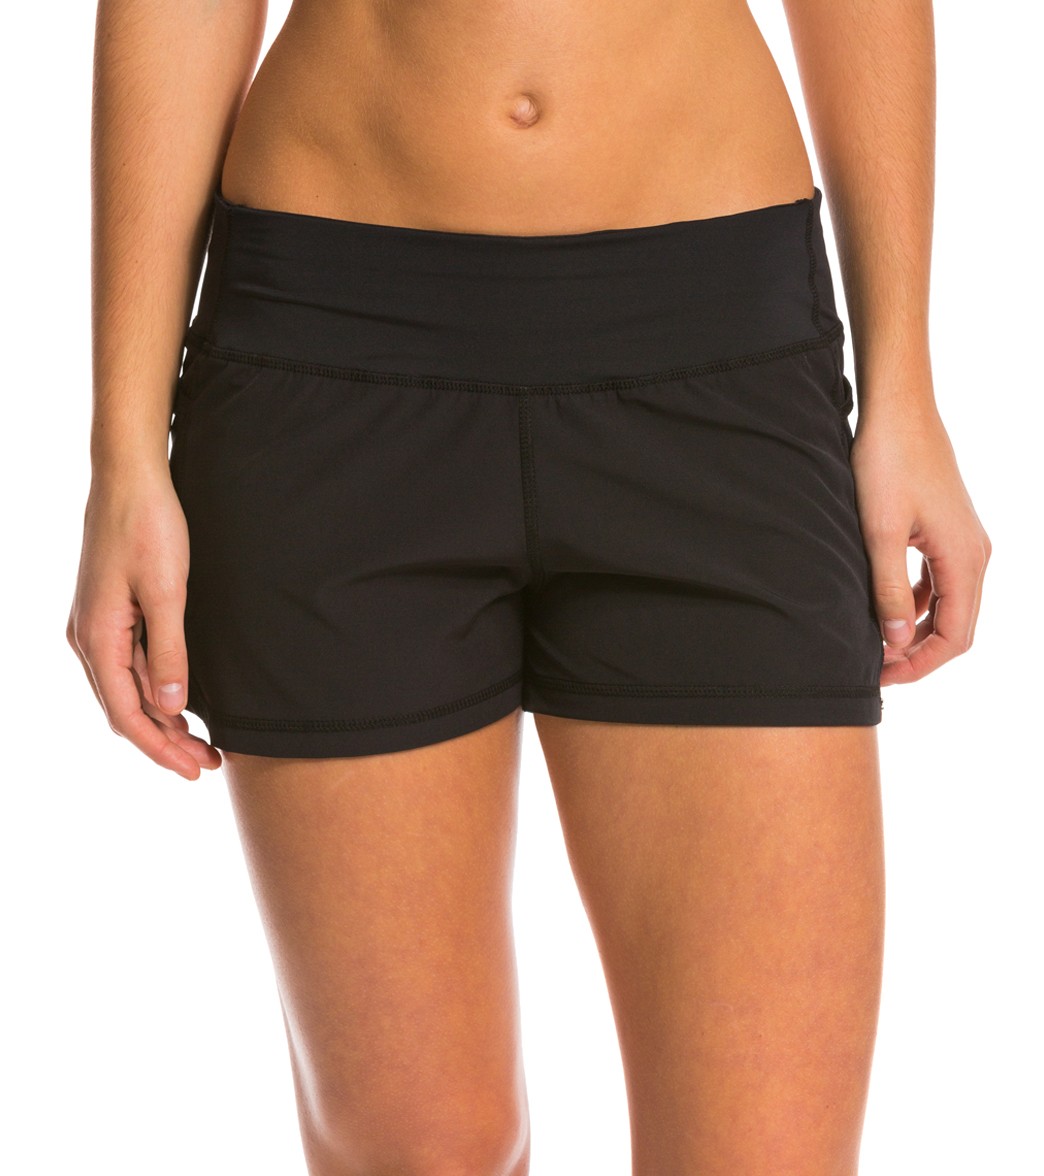 Body Glove Women's Buck Up Shorts - Black Small - Swimoutlet.com